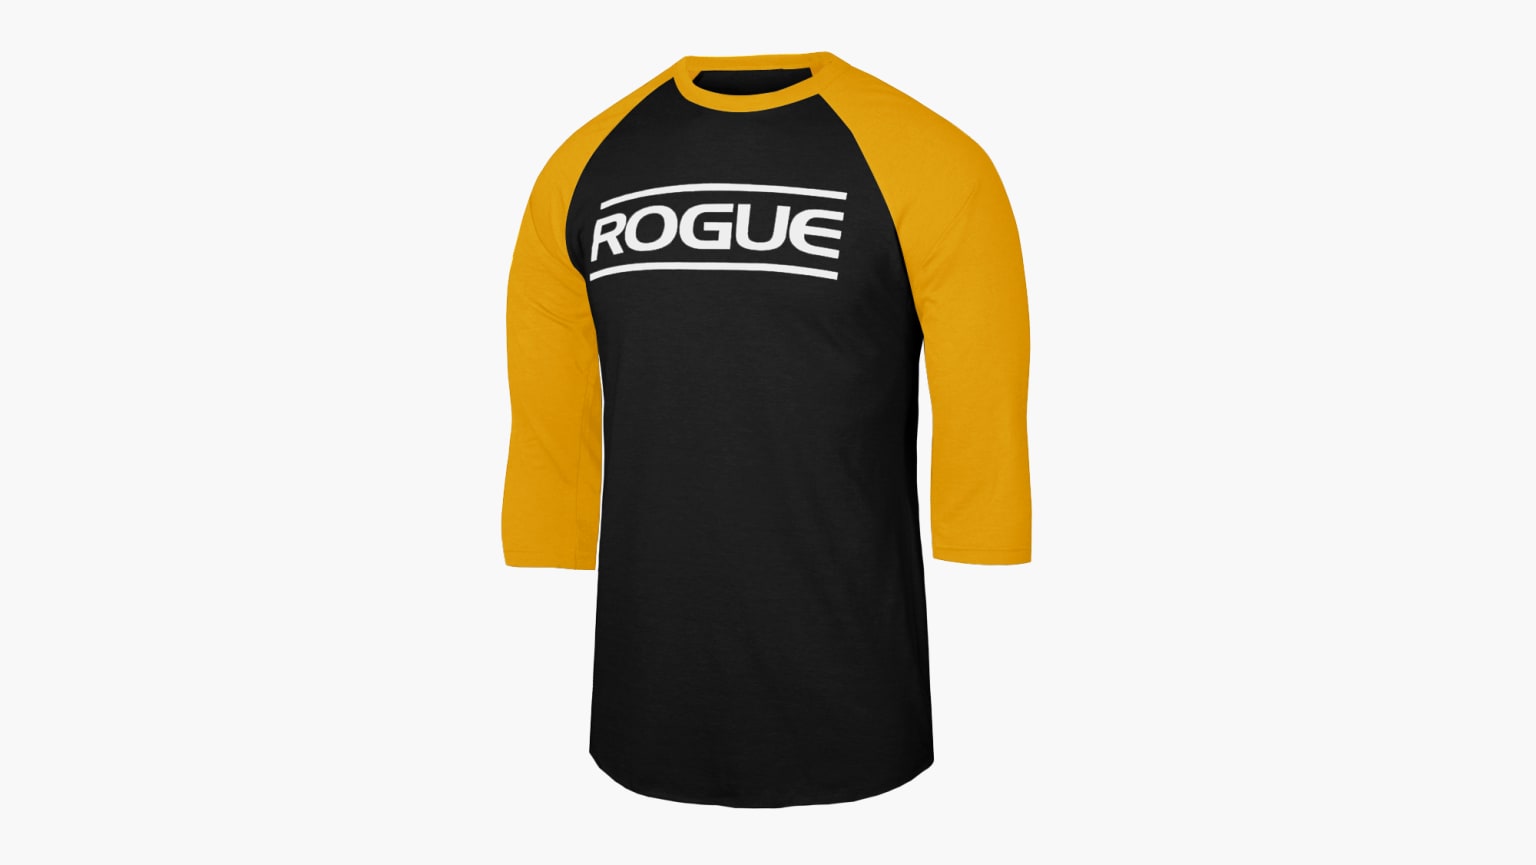 Rogue 3/4 Sleeve Shirt - Black / Yellow